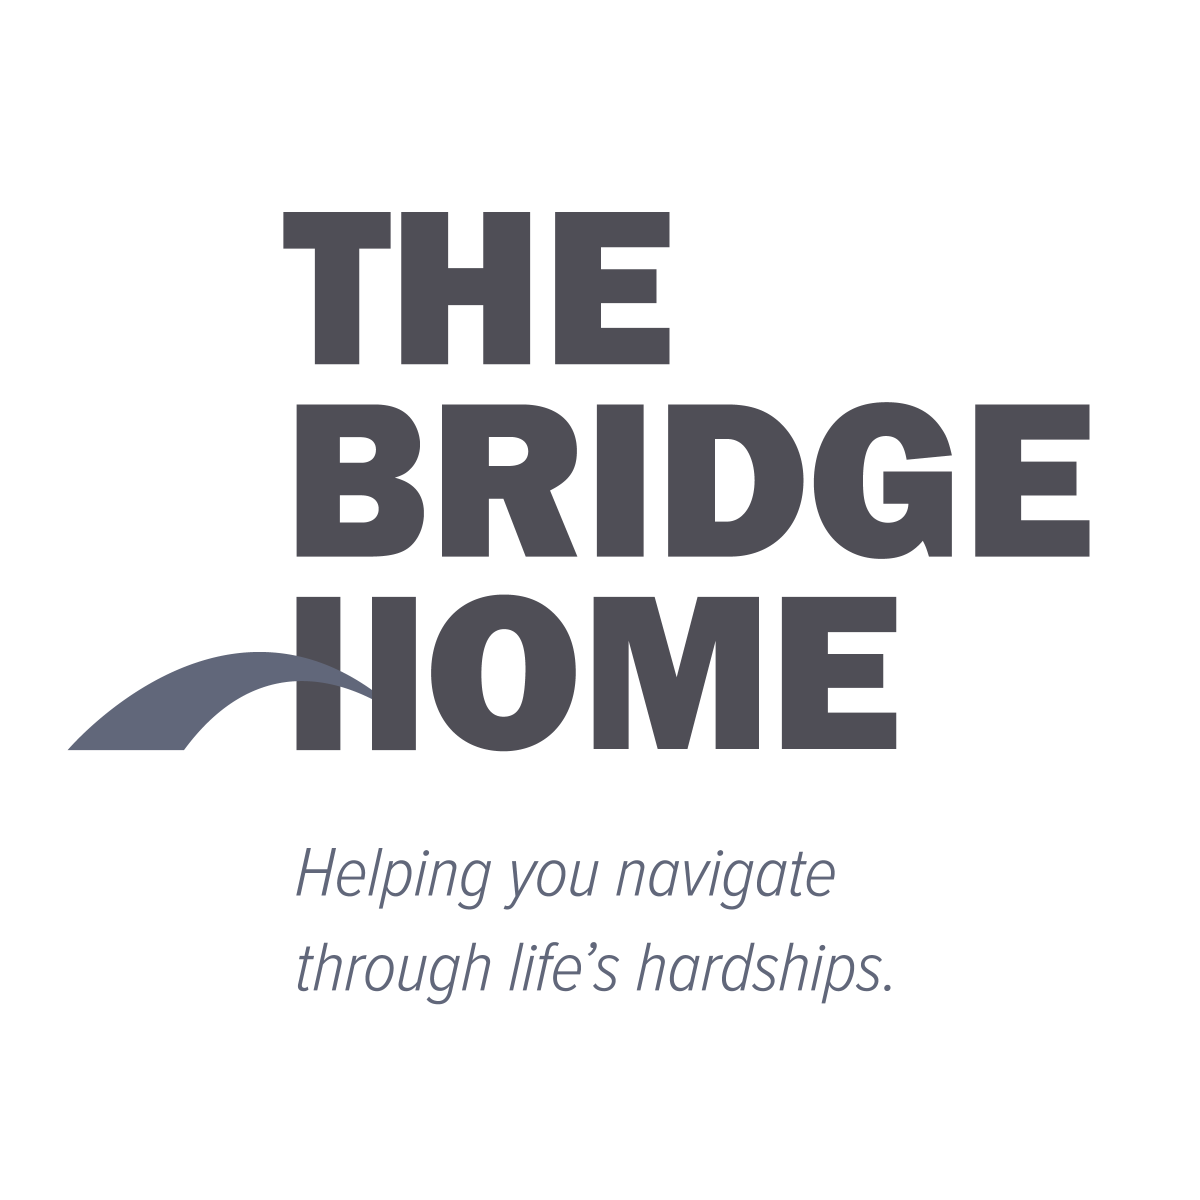 The Bridge Home. Helping you navigate through life's hardships.